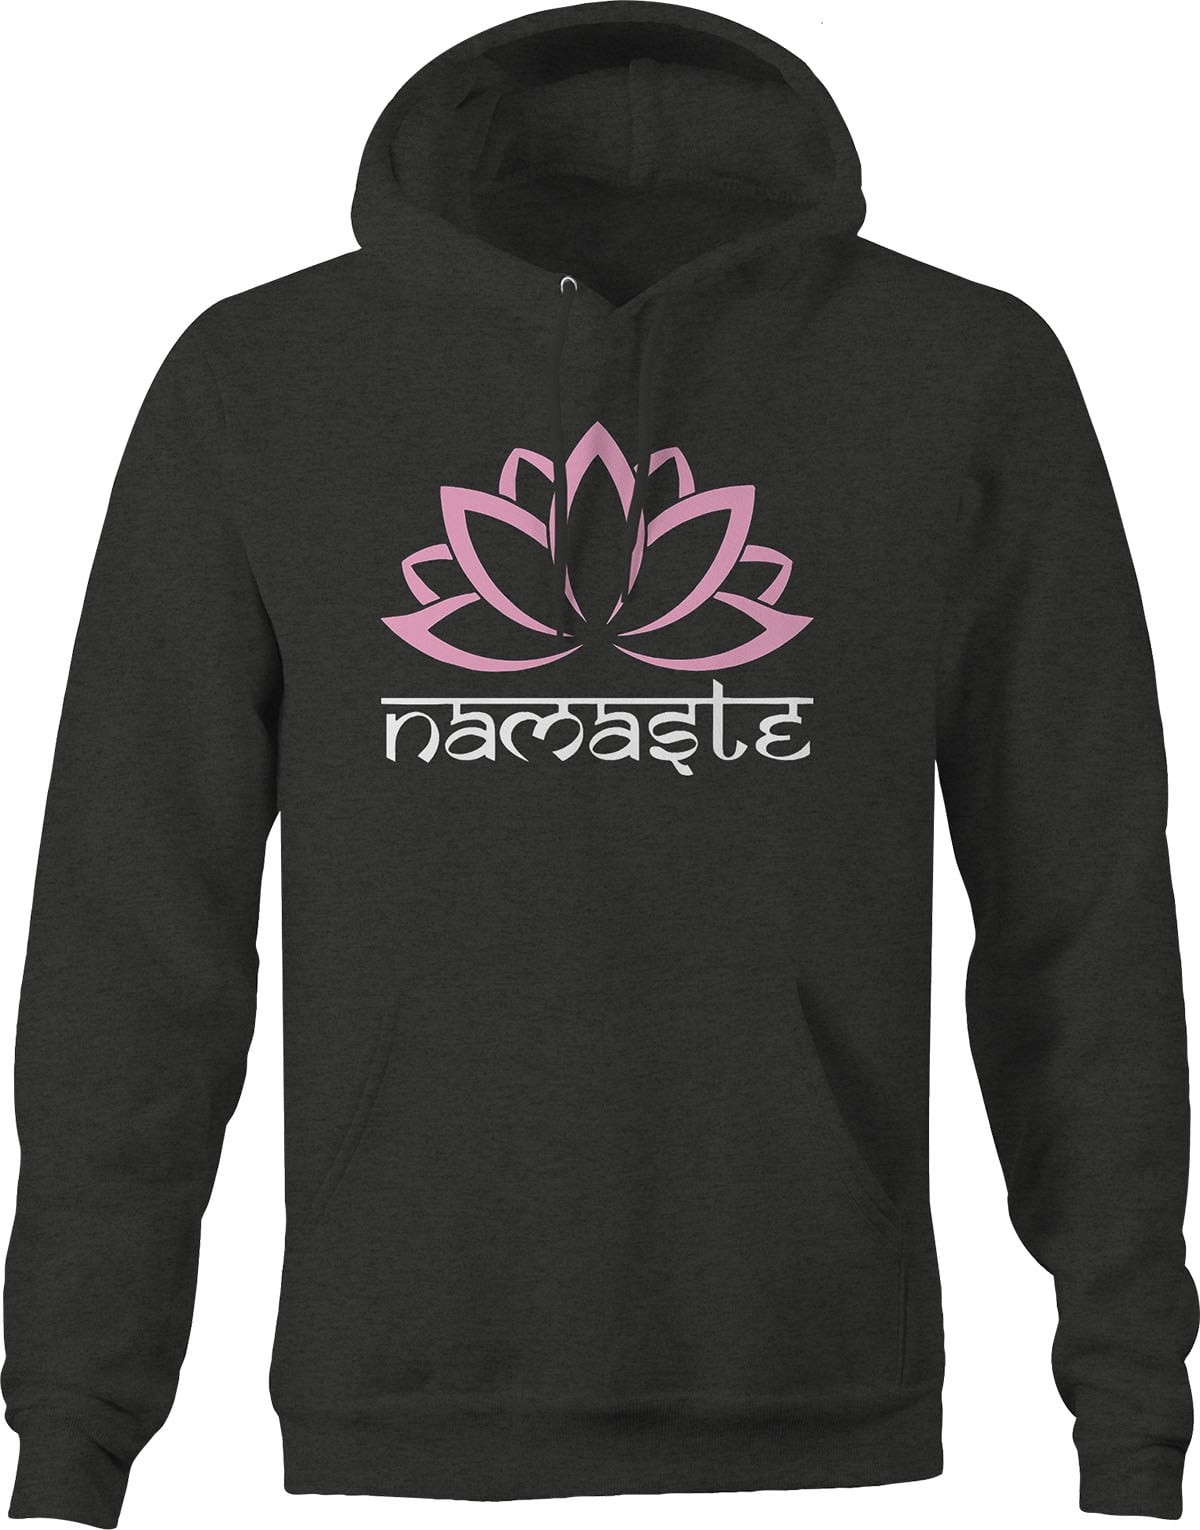 Namaste Lotus blossom Pullover Hoodie